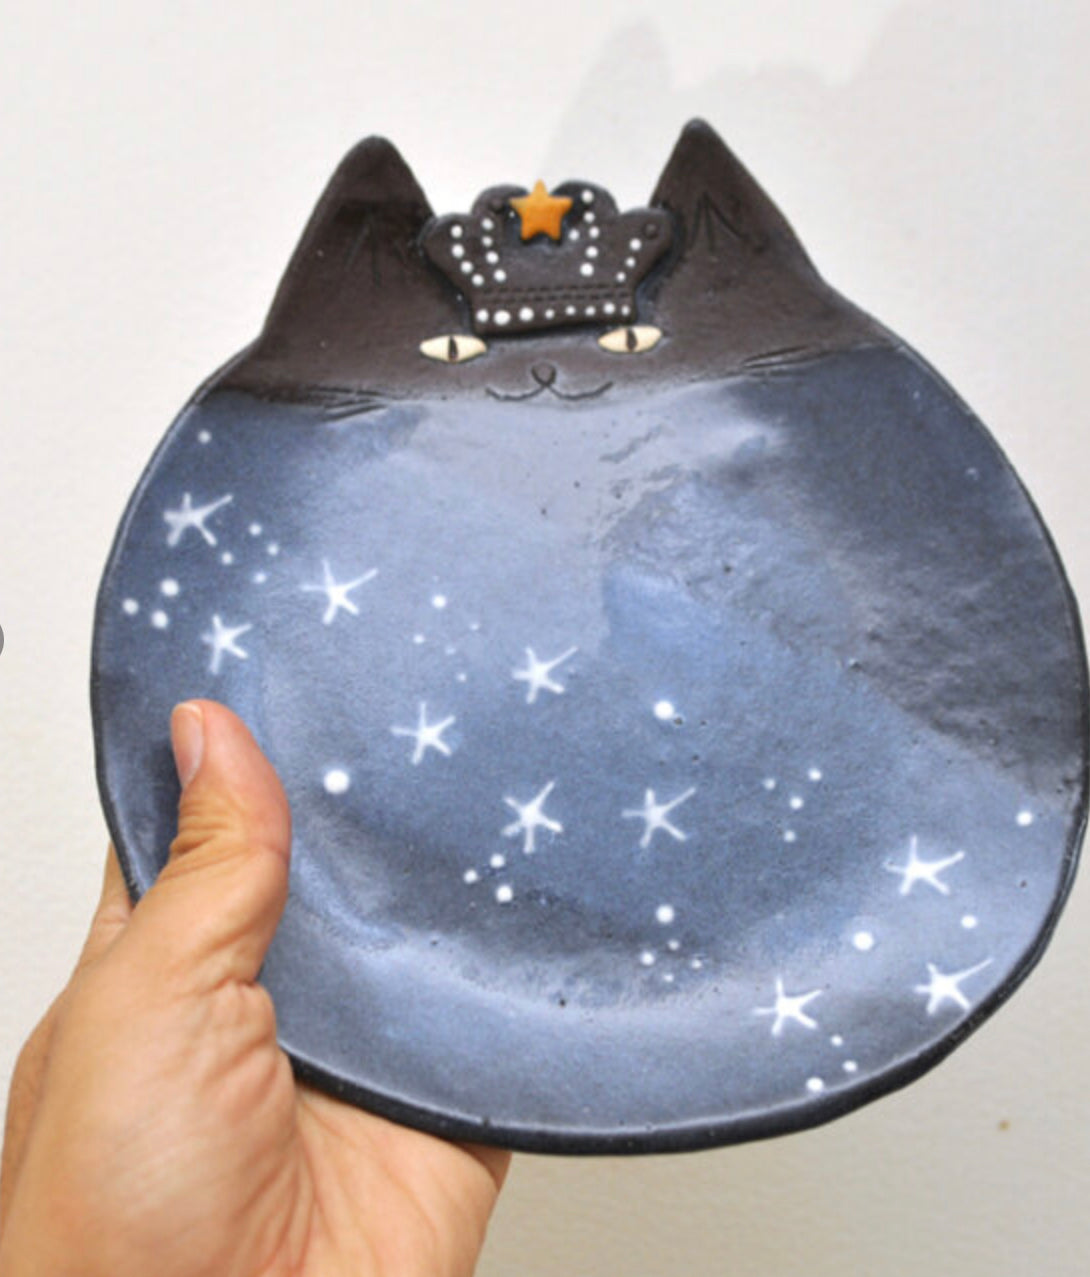 Star cat KING dish